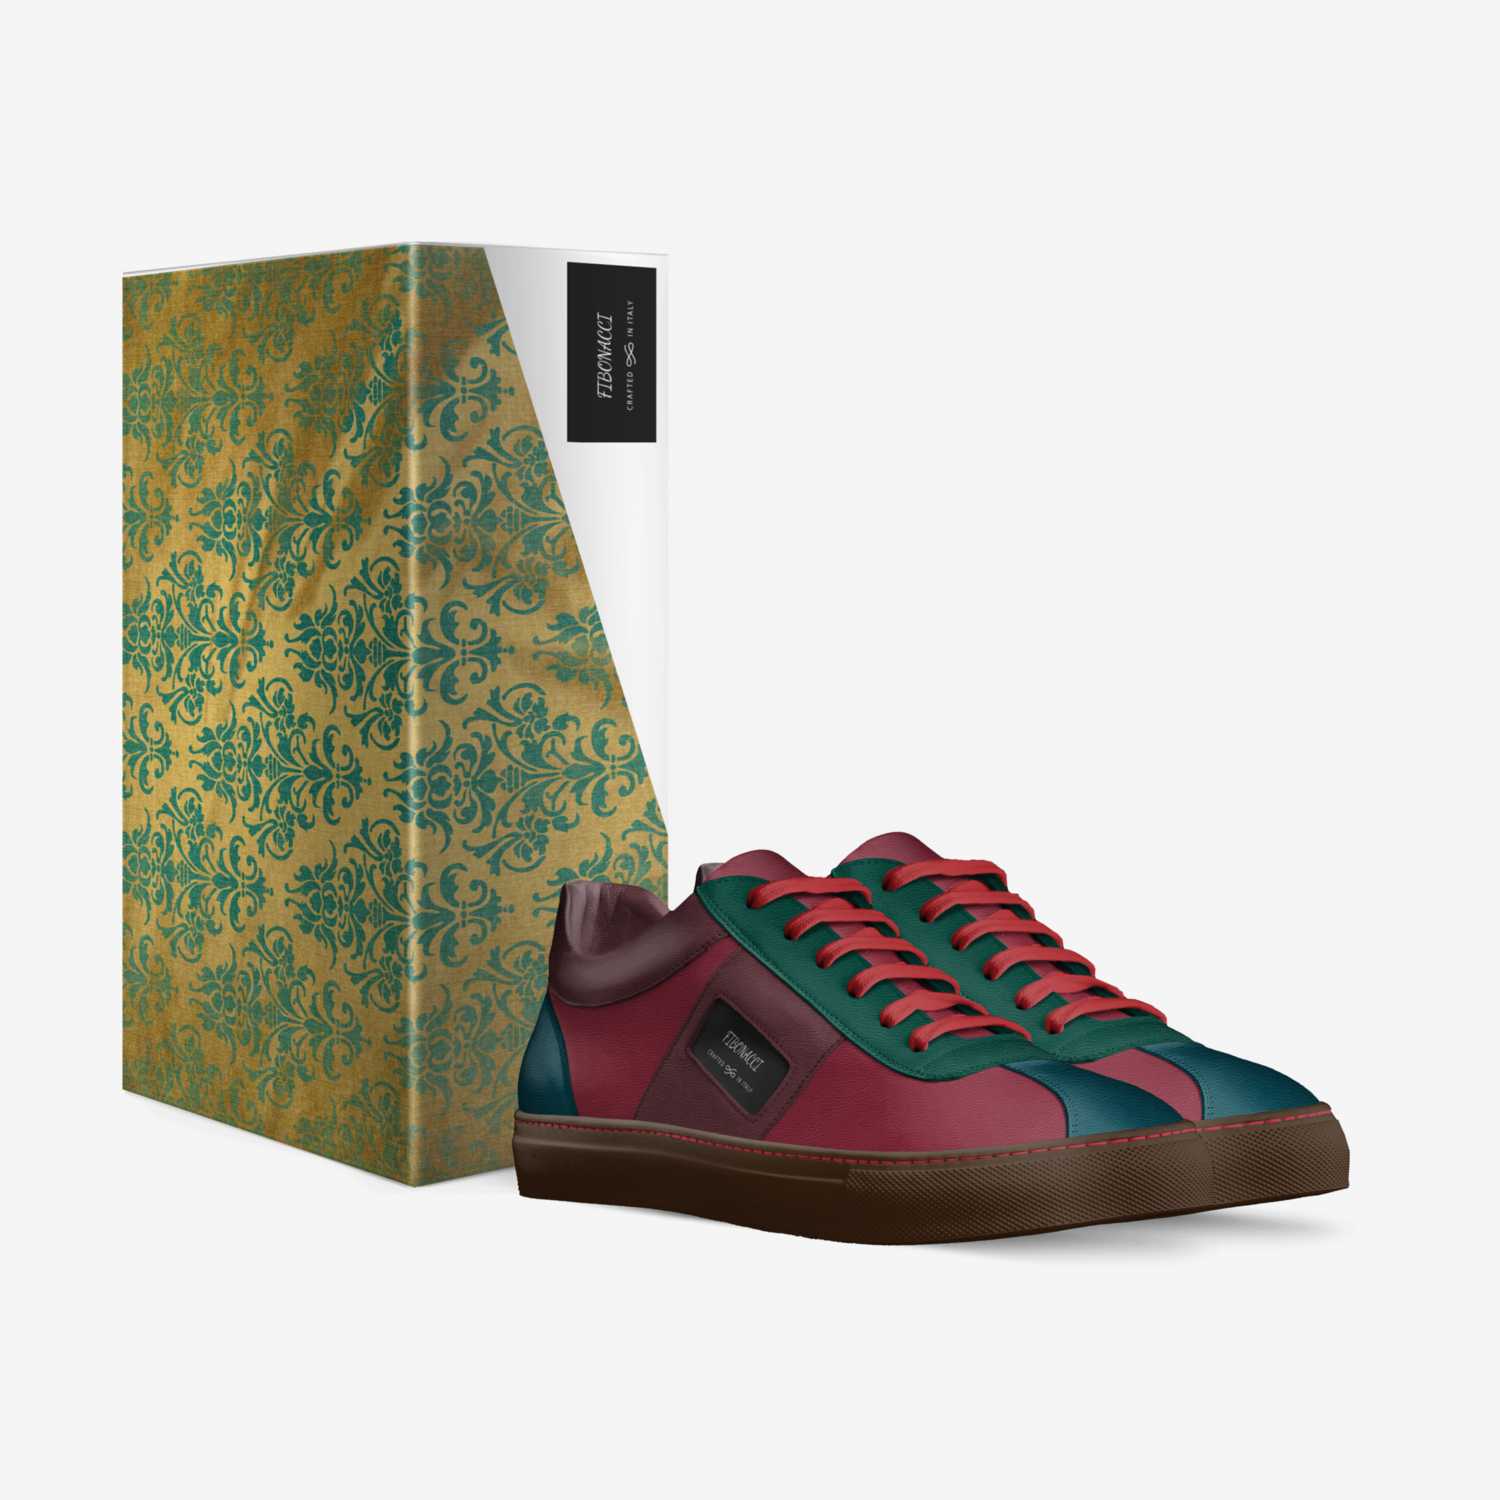 FIBONACCI  custom made in Italy shoes by Barrington Gardner | Box view